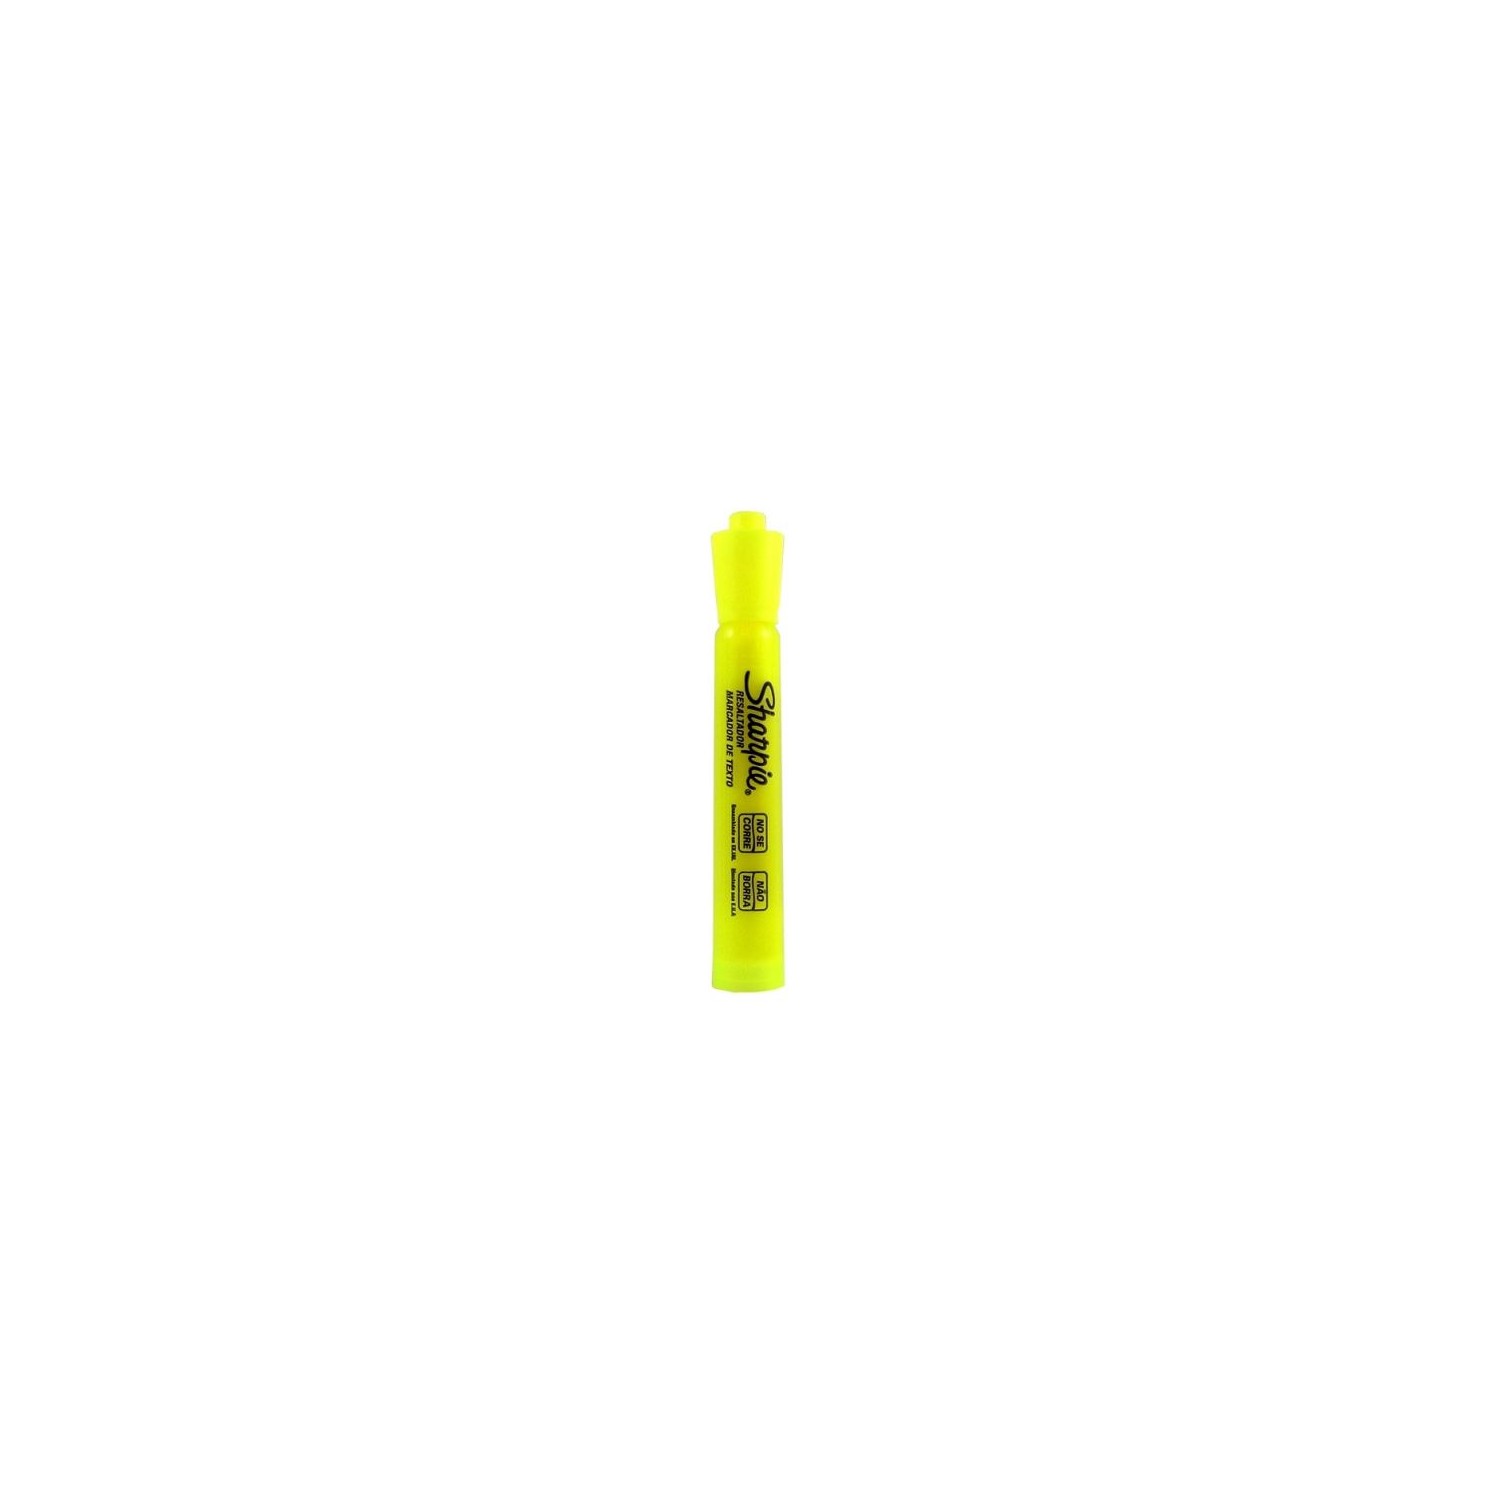 Resaltador Accent Amarillo - Sharpie 3D 1 Unidad